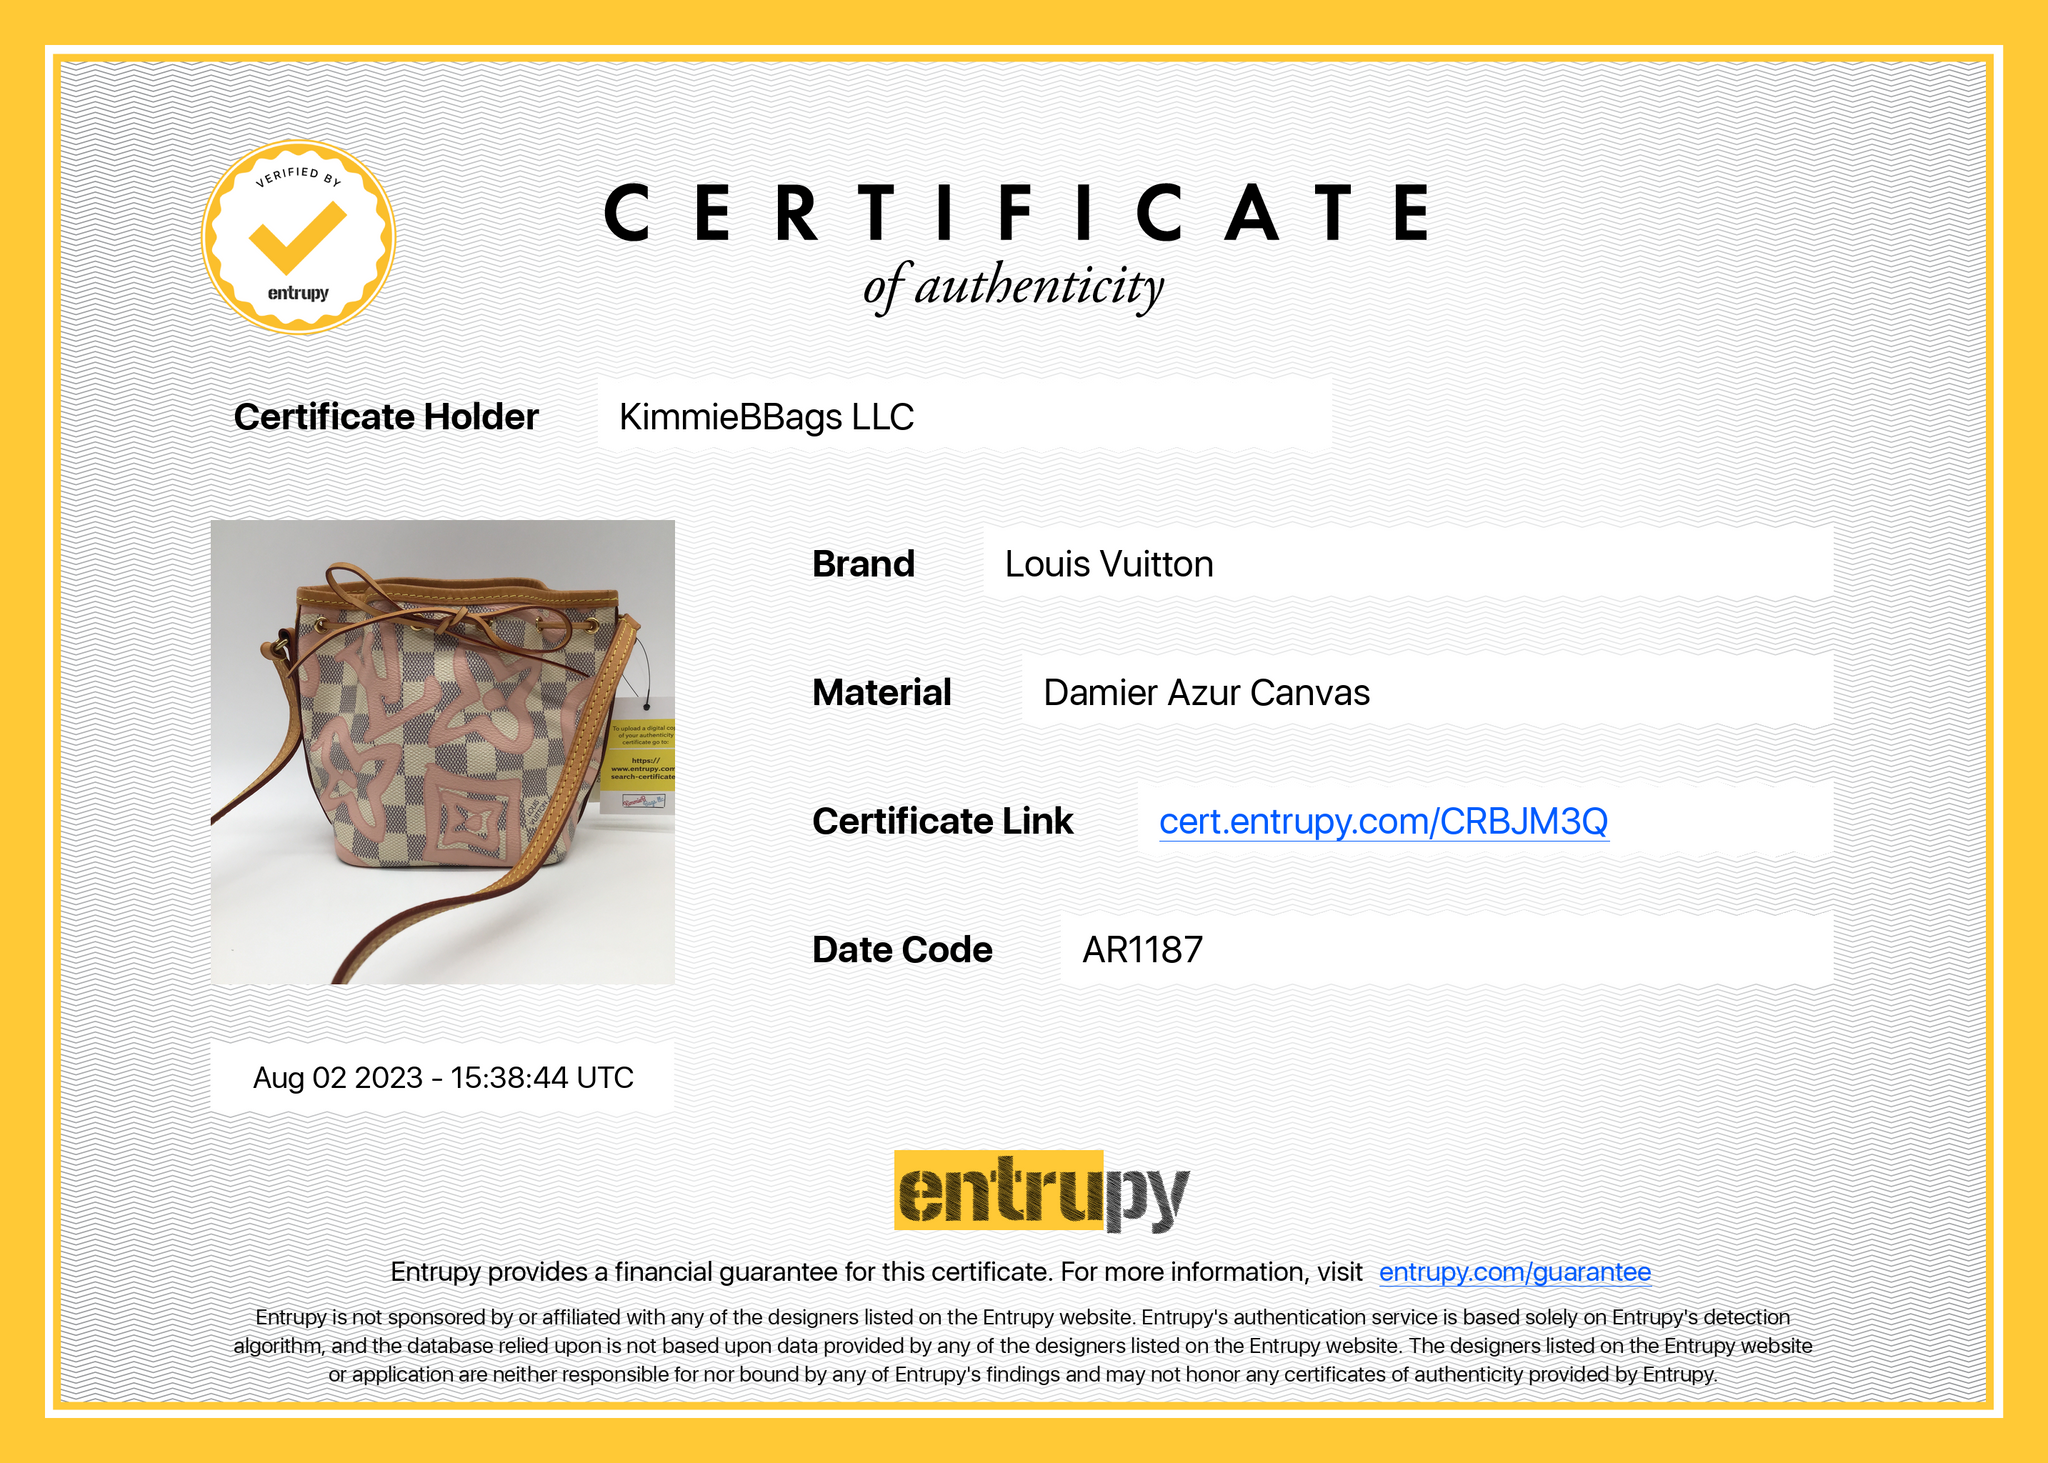 pdf louis vuitton certificate of authenticity